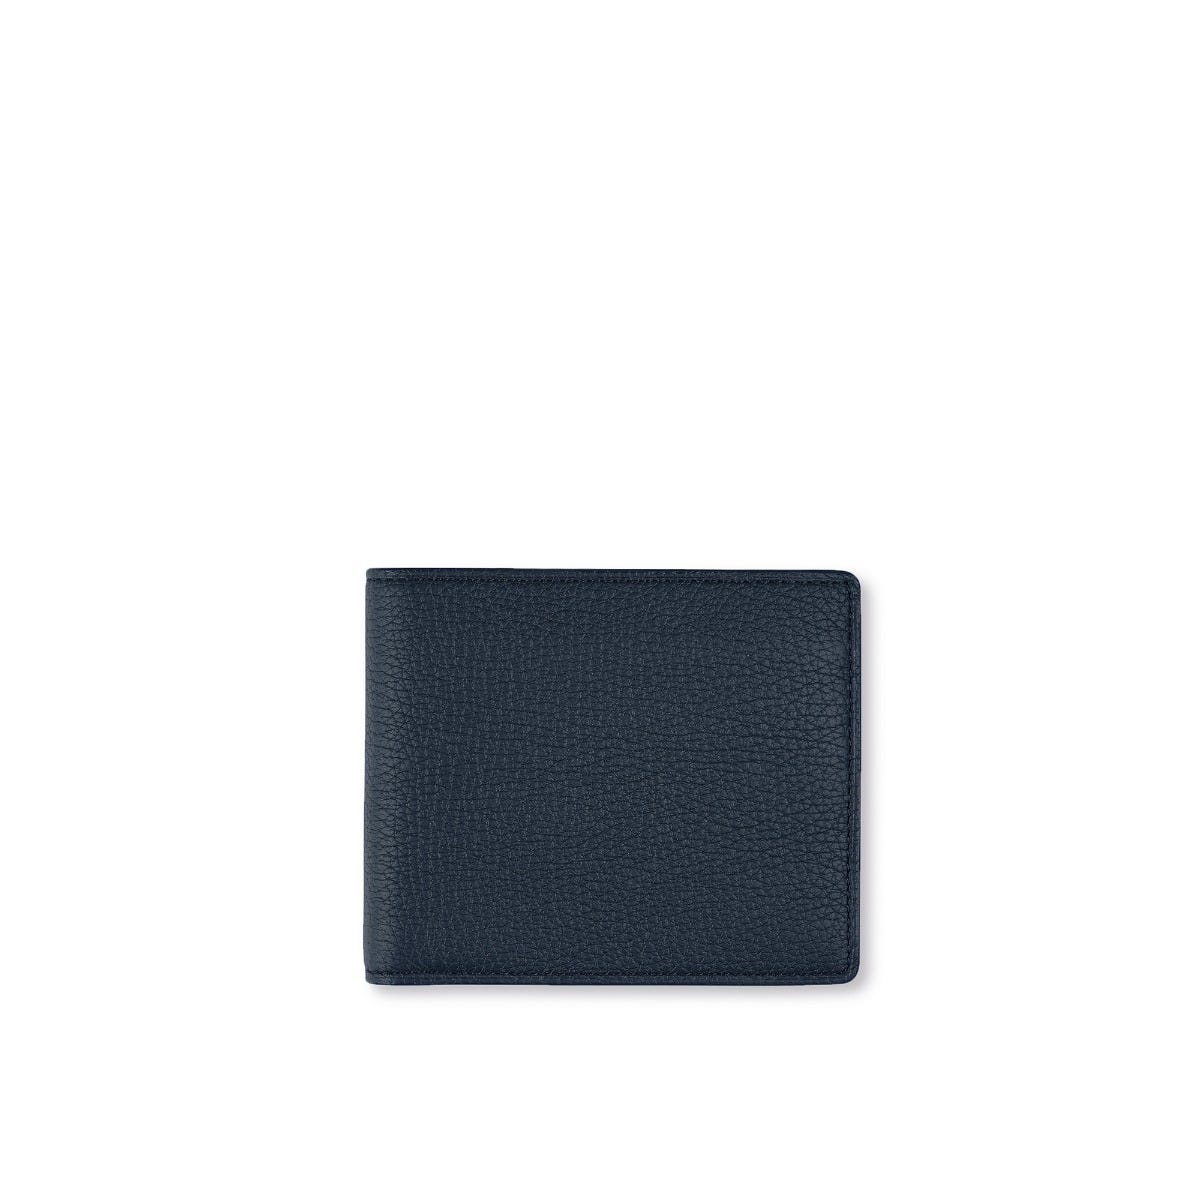 GMT 6cc Billfold Wallet in Navy Soft Grain Leather